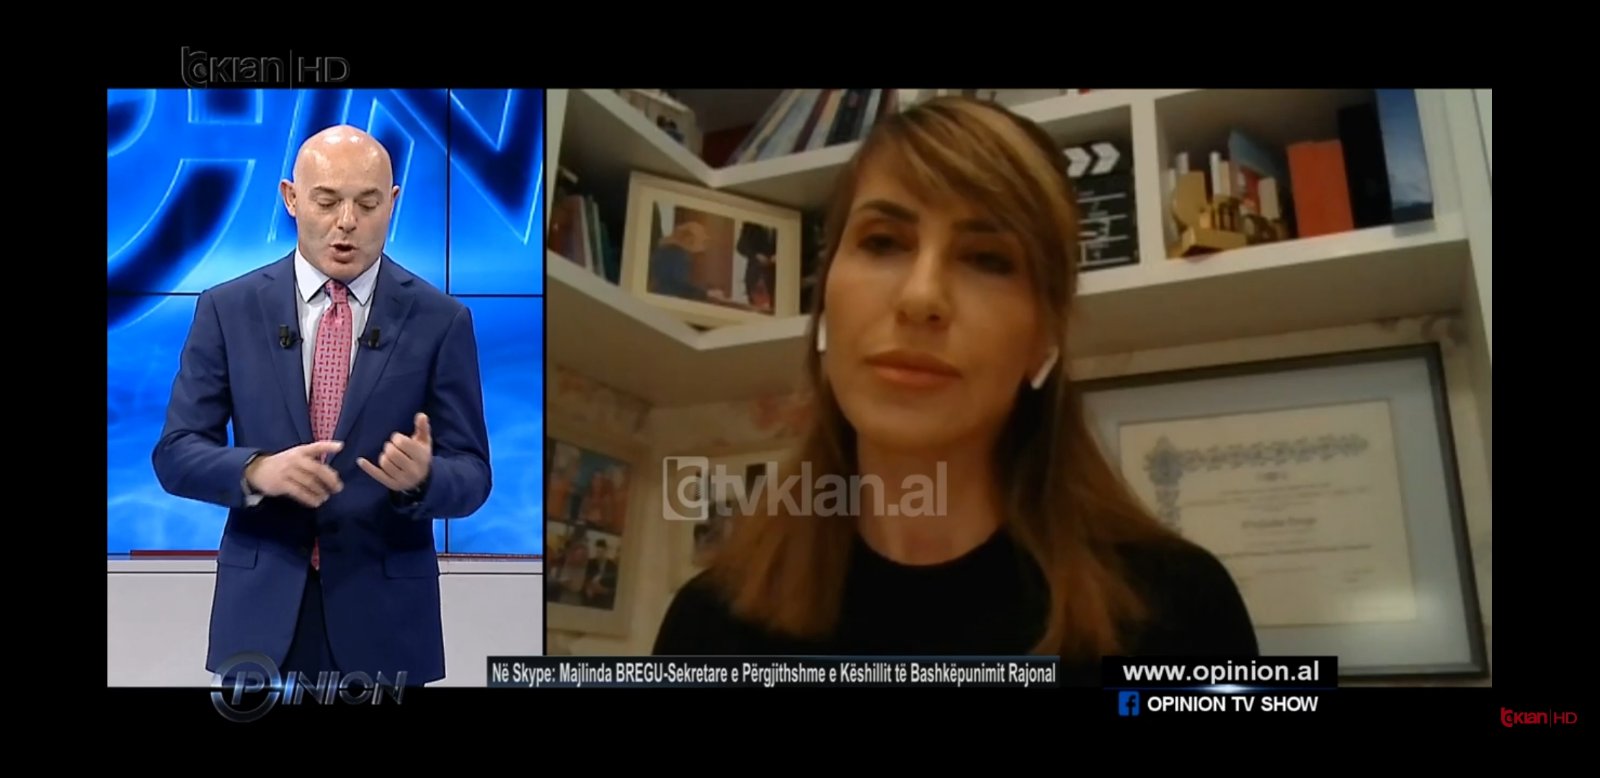 RCC Secretary General Majlinda Bregu spoke at the Tirana based RTV Klan’s Opinion show on 19 March 2020